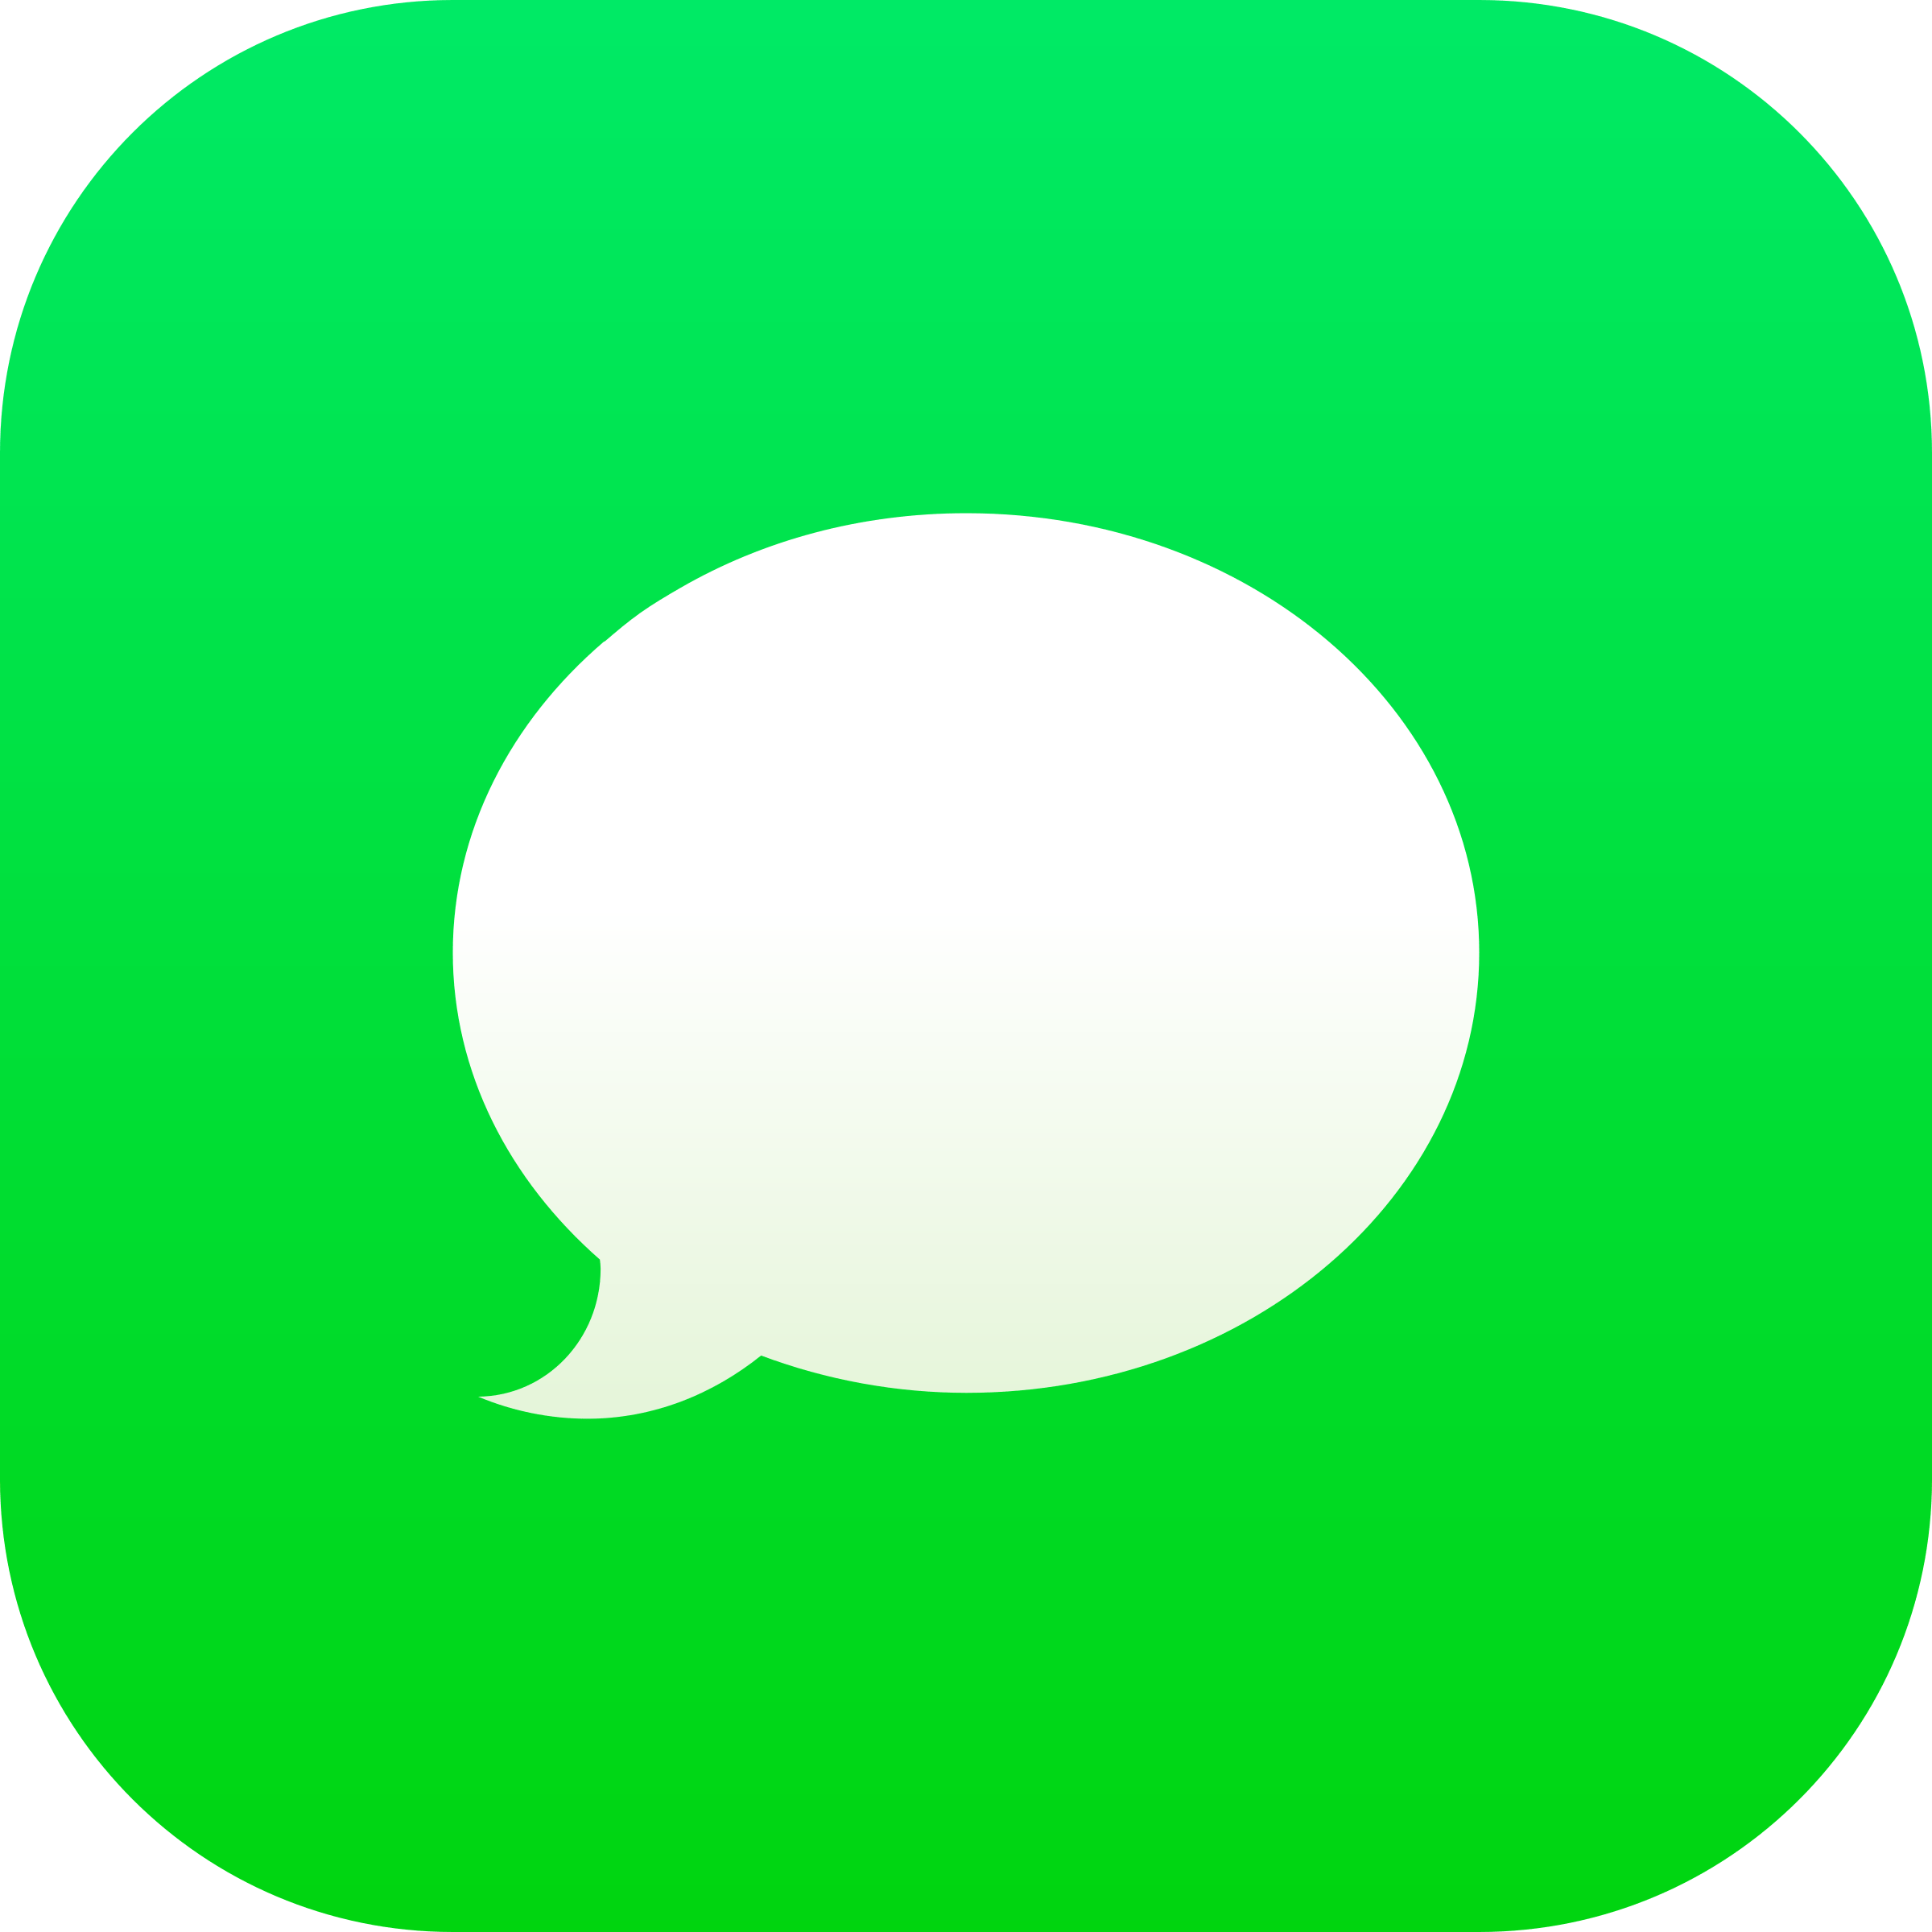 Messages Logo - Messages iOS Logo PNG Transparent & SVG Vector - Freebie Supply